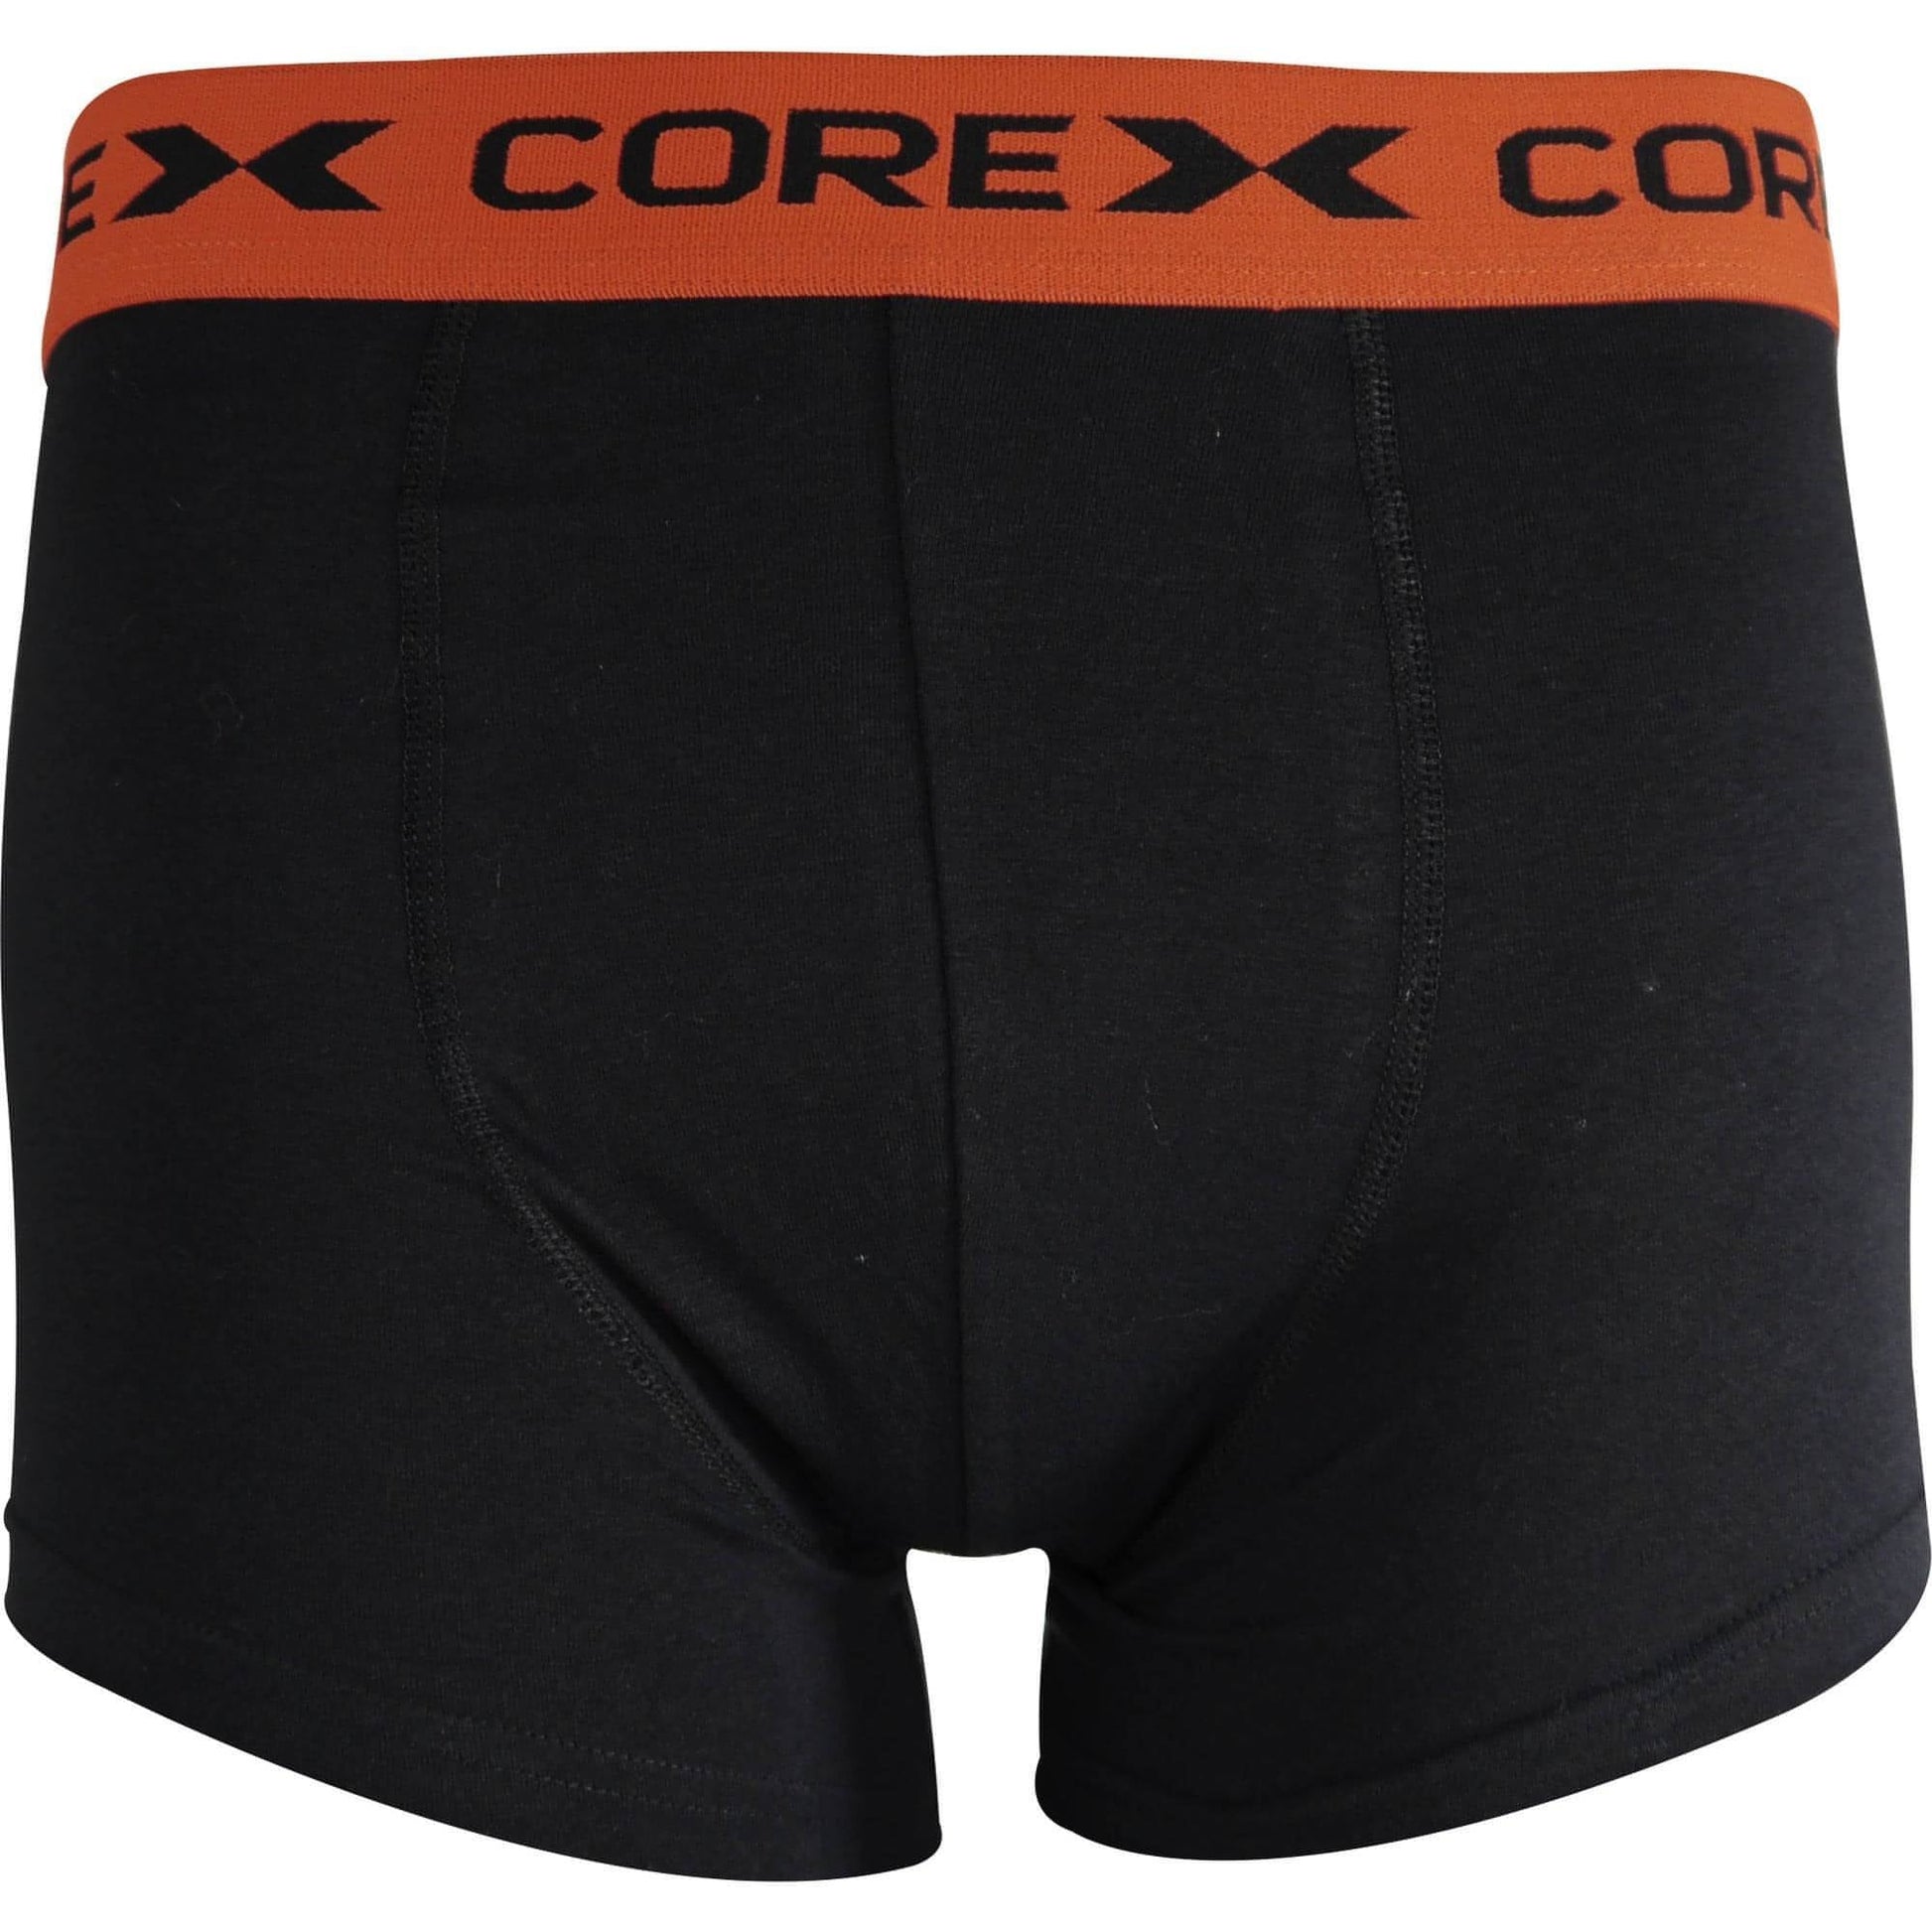 Corex Fitness Classic Pack Boxers 1P204921Wm Greenorange Orange Front - Front View